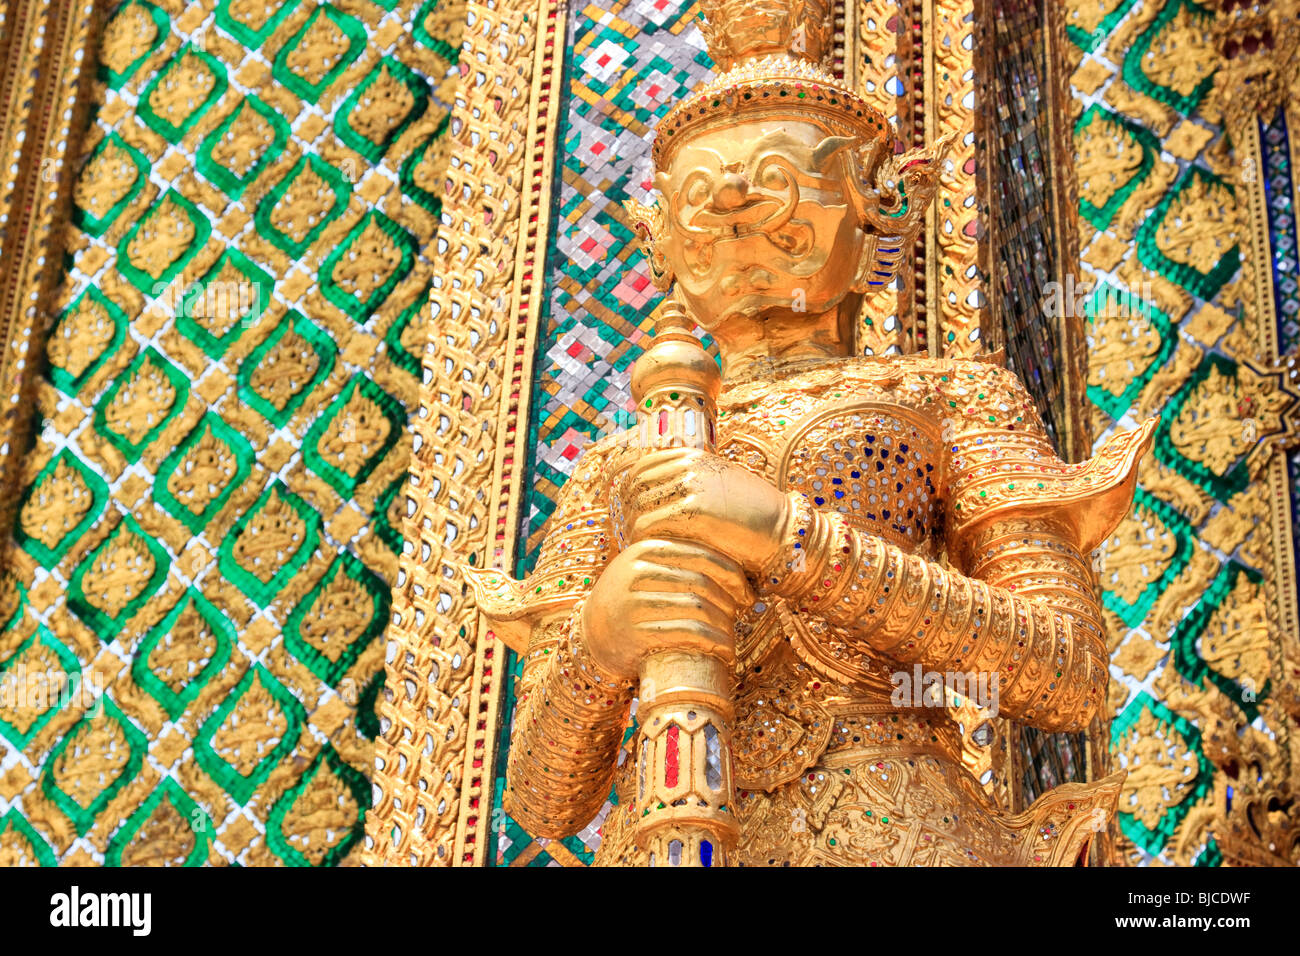 Golden demon statue temple decoration at Wat prakaew, Bangkok, Thailand Stock Photo